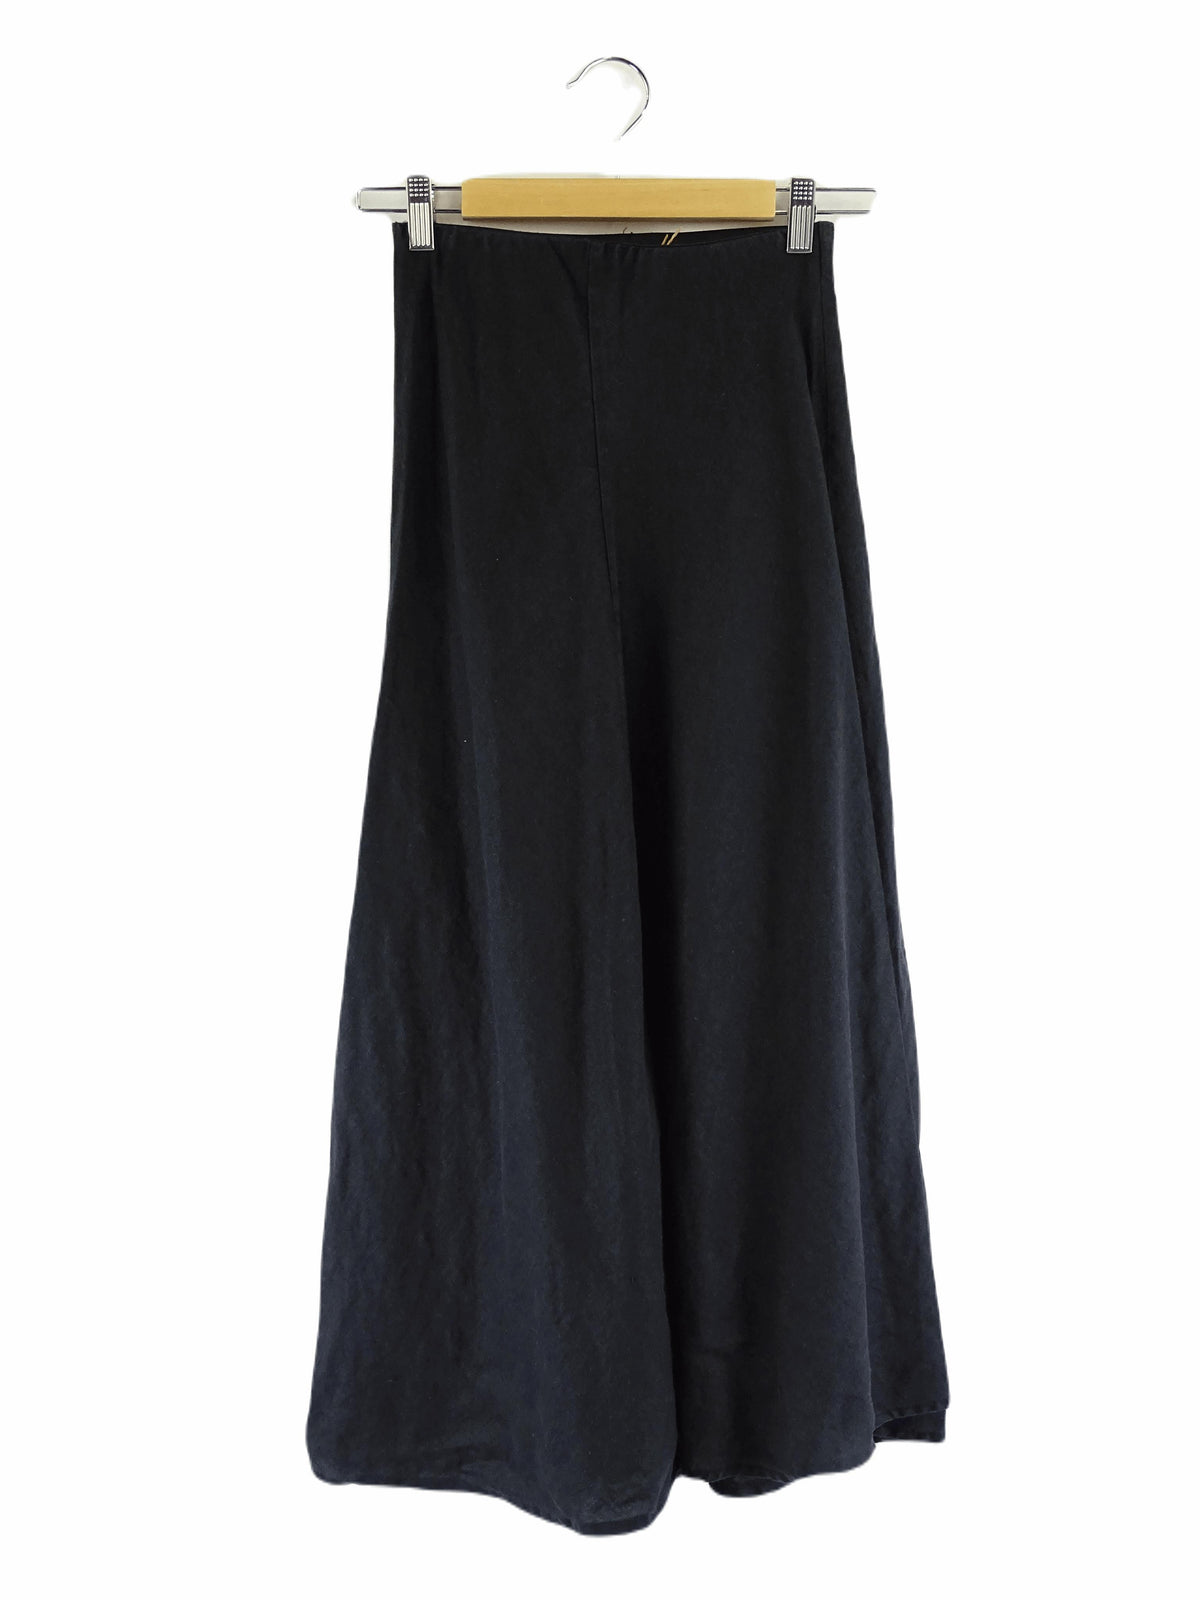 Seed Heritage Black Linen Skirt 6